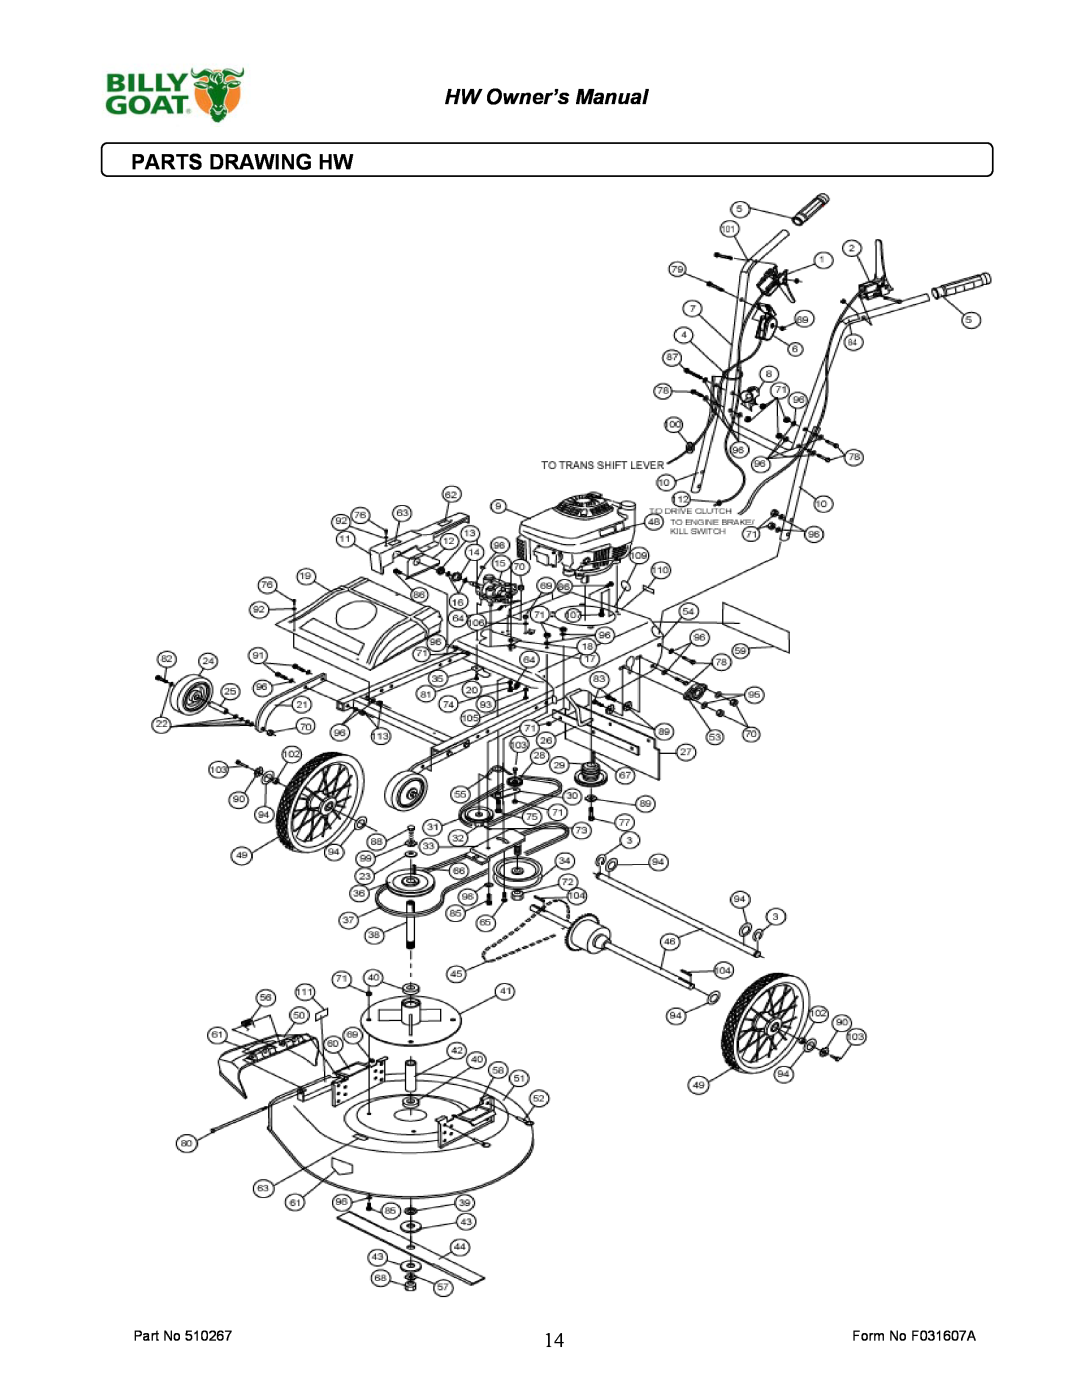 Billy Goat HW651SP owner manual Parts Drawing Hw 